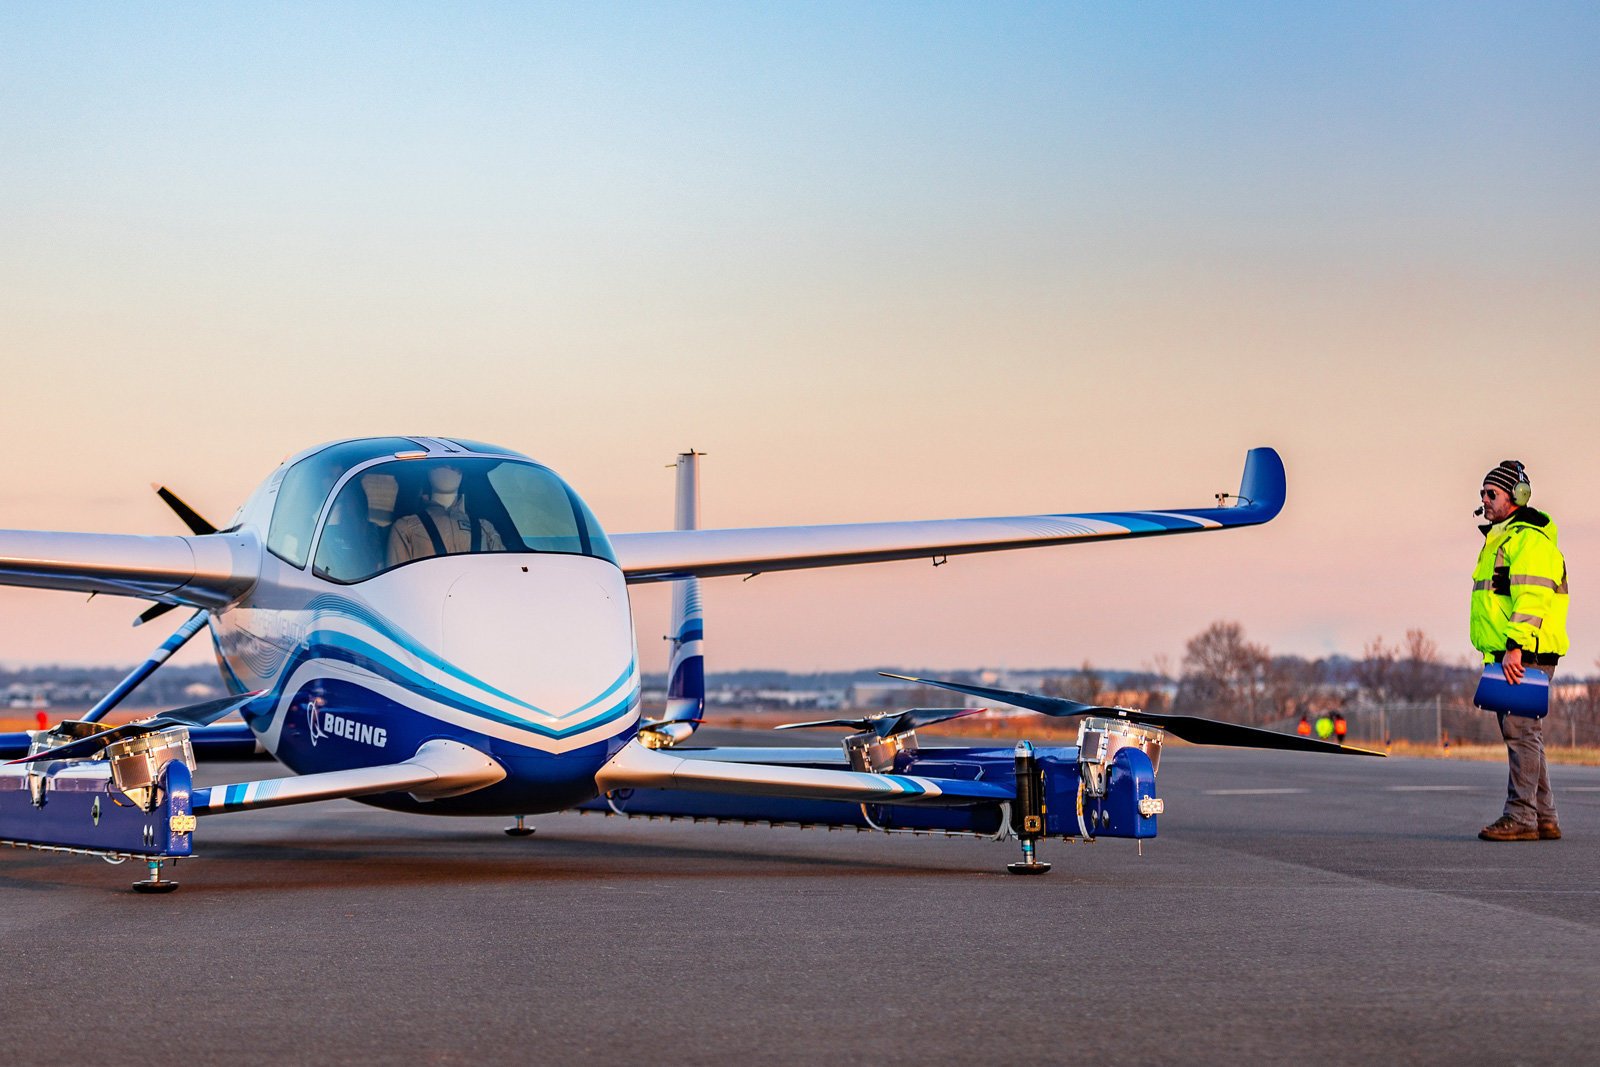 More information about "Το ιπτάμενο "ταξί" της Boeing πραγματοποίησε την πρώτη του δοκιμαστική πτήση"